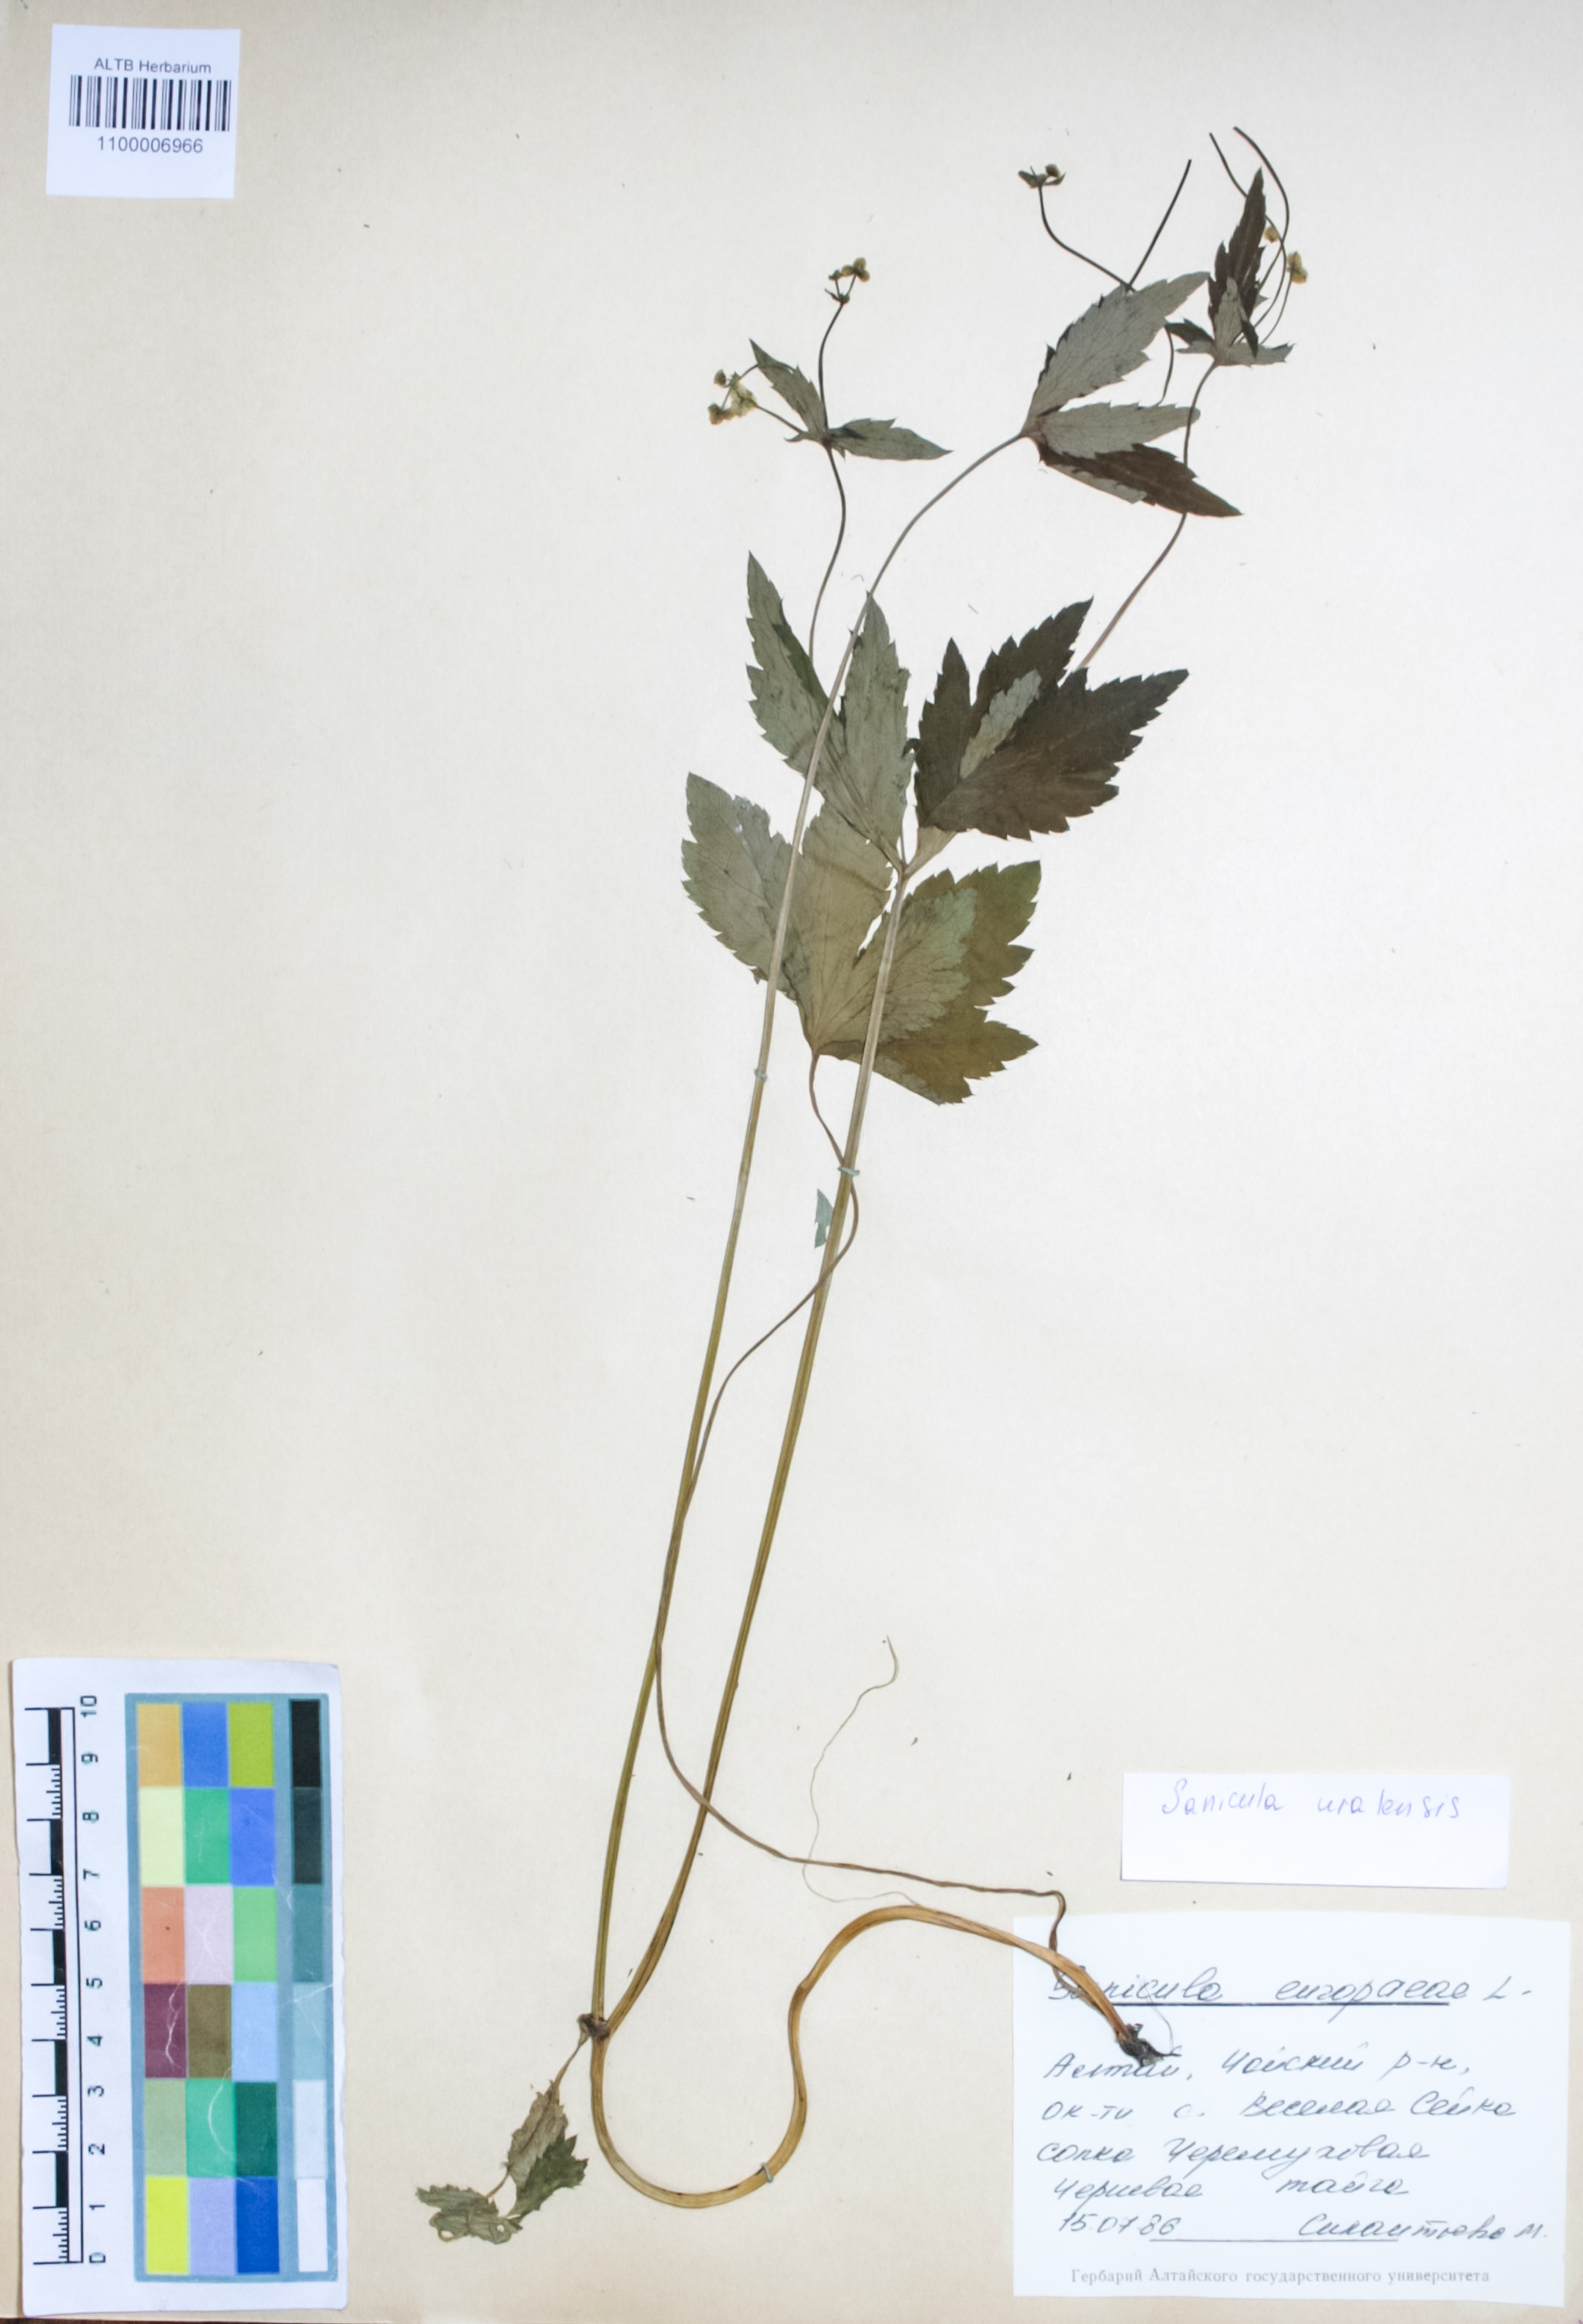 Apiaceae,Sanicula uralensis Kleopow ex Kamelin, Czubarov & Shmakov